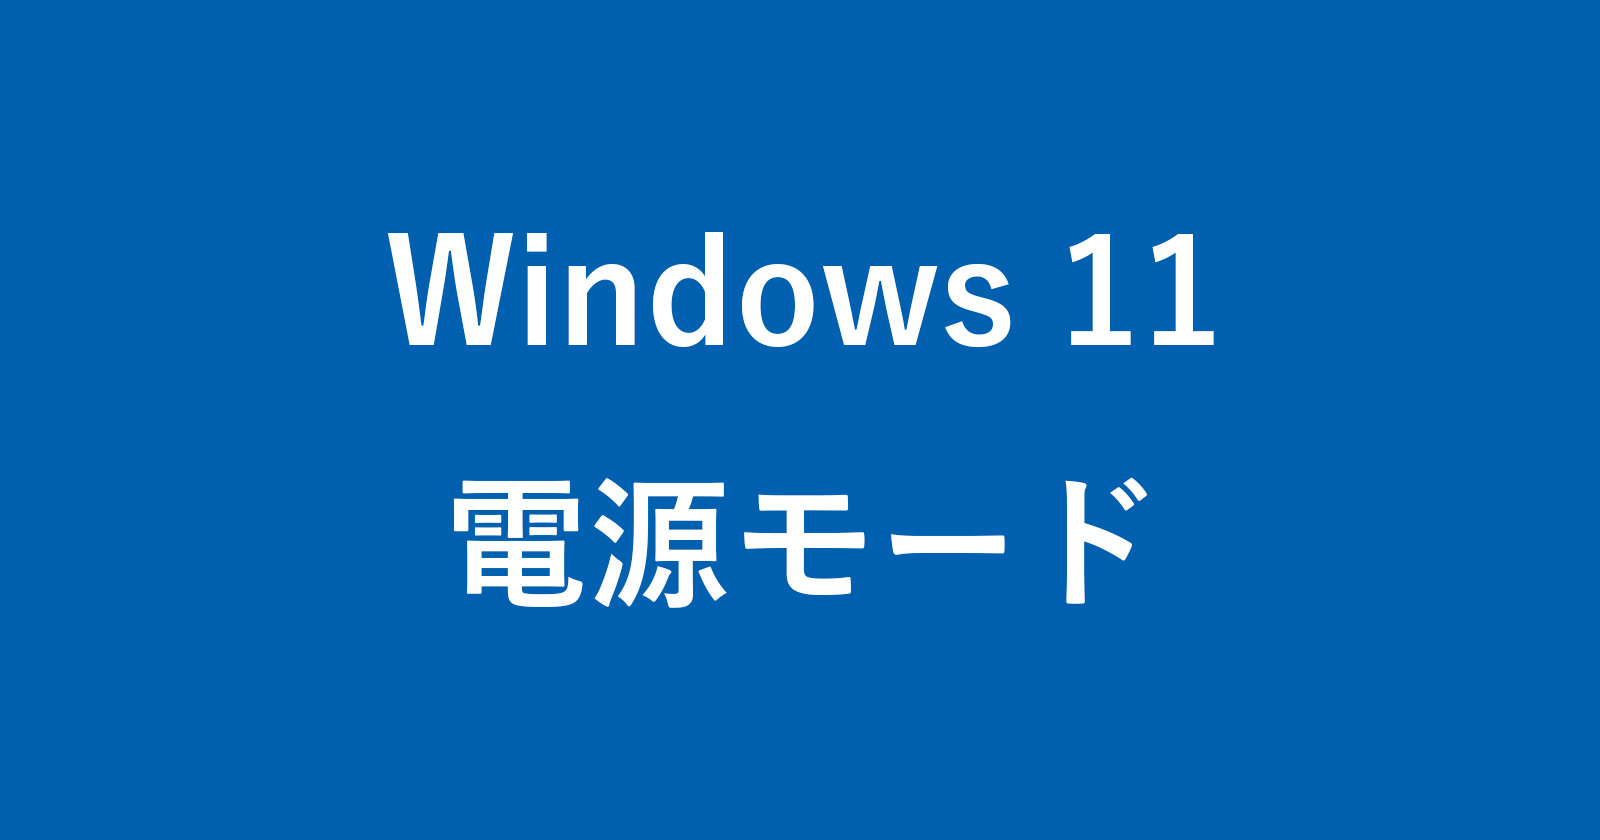 windows 11 power mode